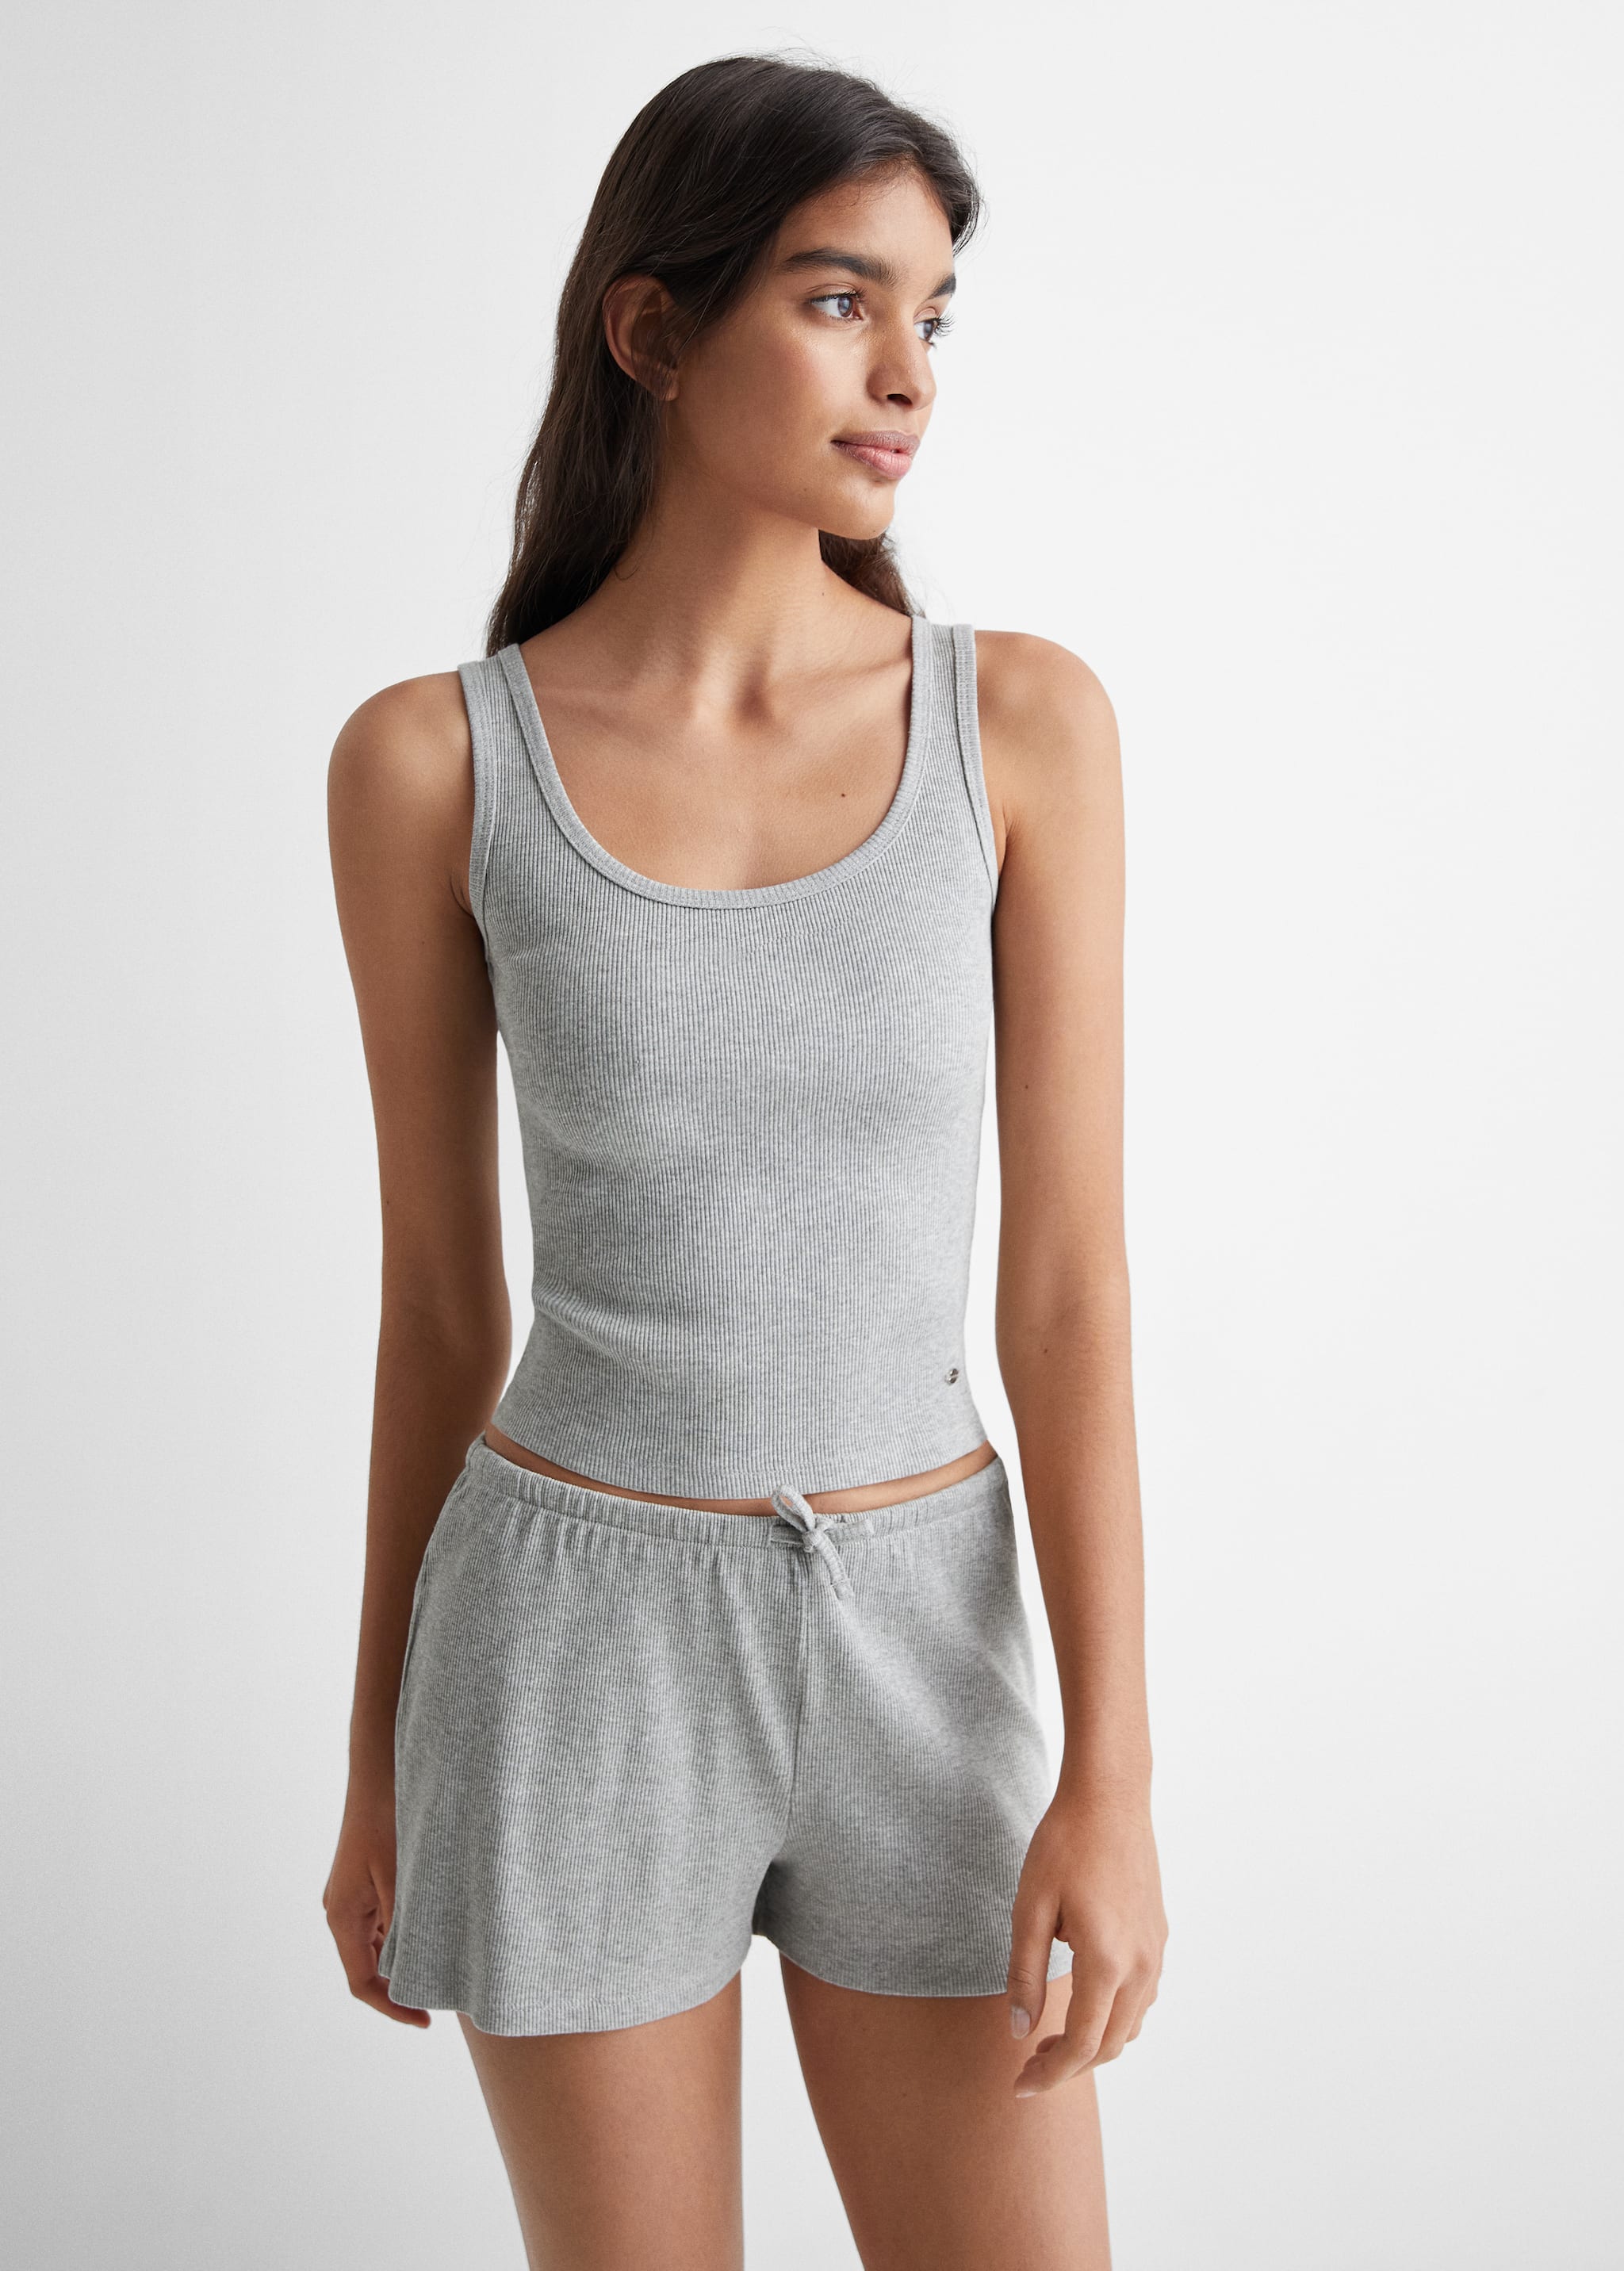 Pack pijama algodón corto - Plano medio